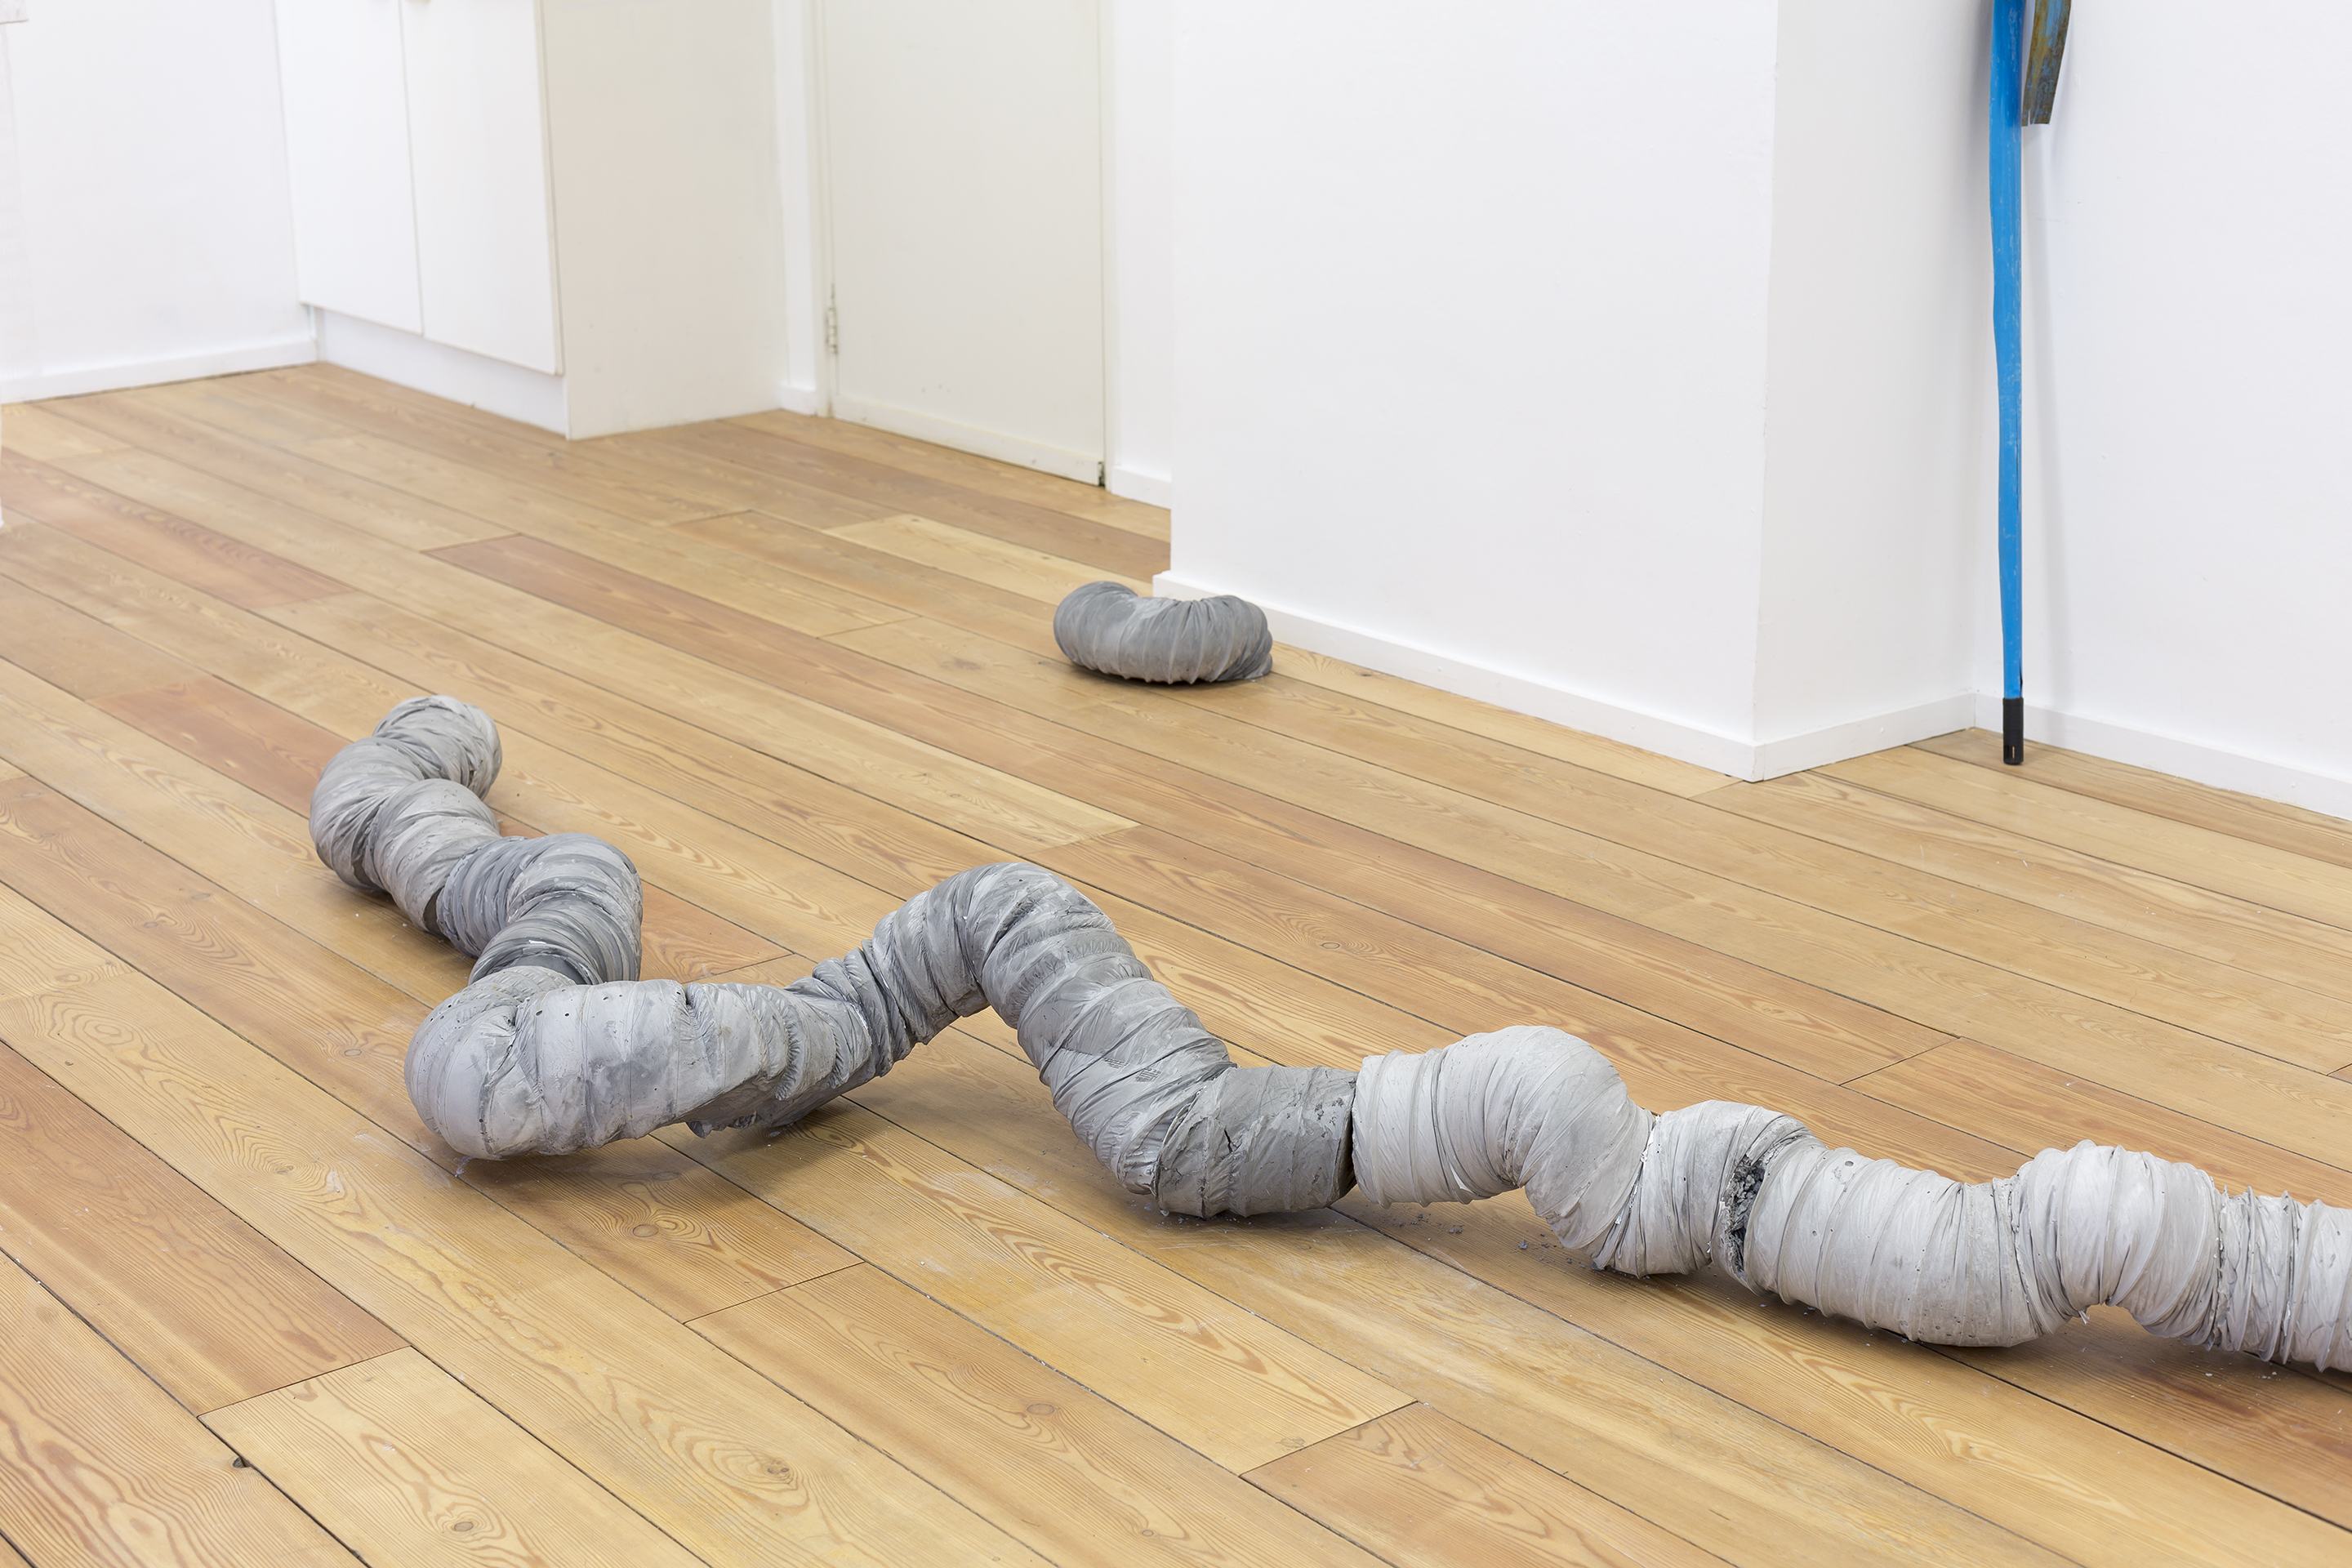 'Untitled (crawl)' & 'Untitled (found object)' by Sara Bjarland